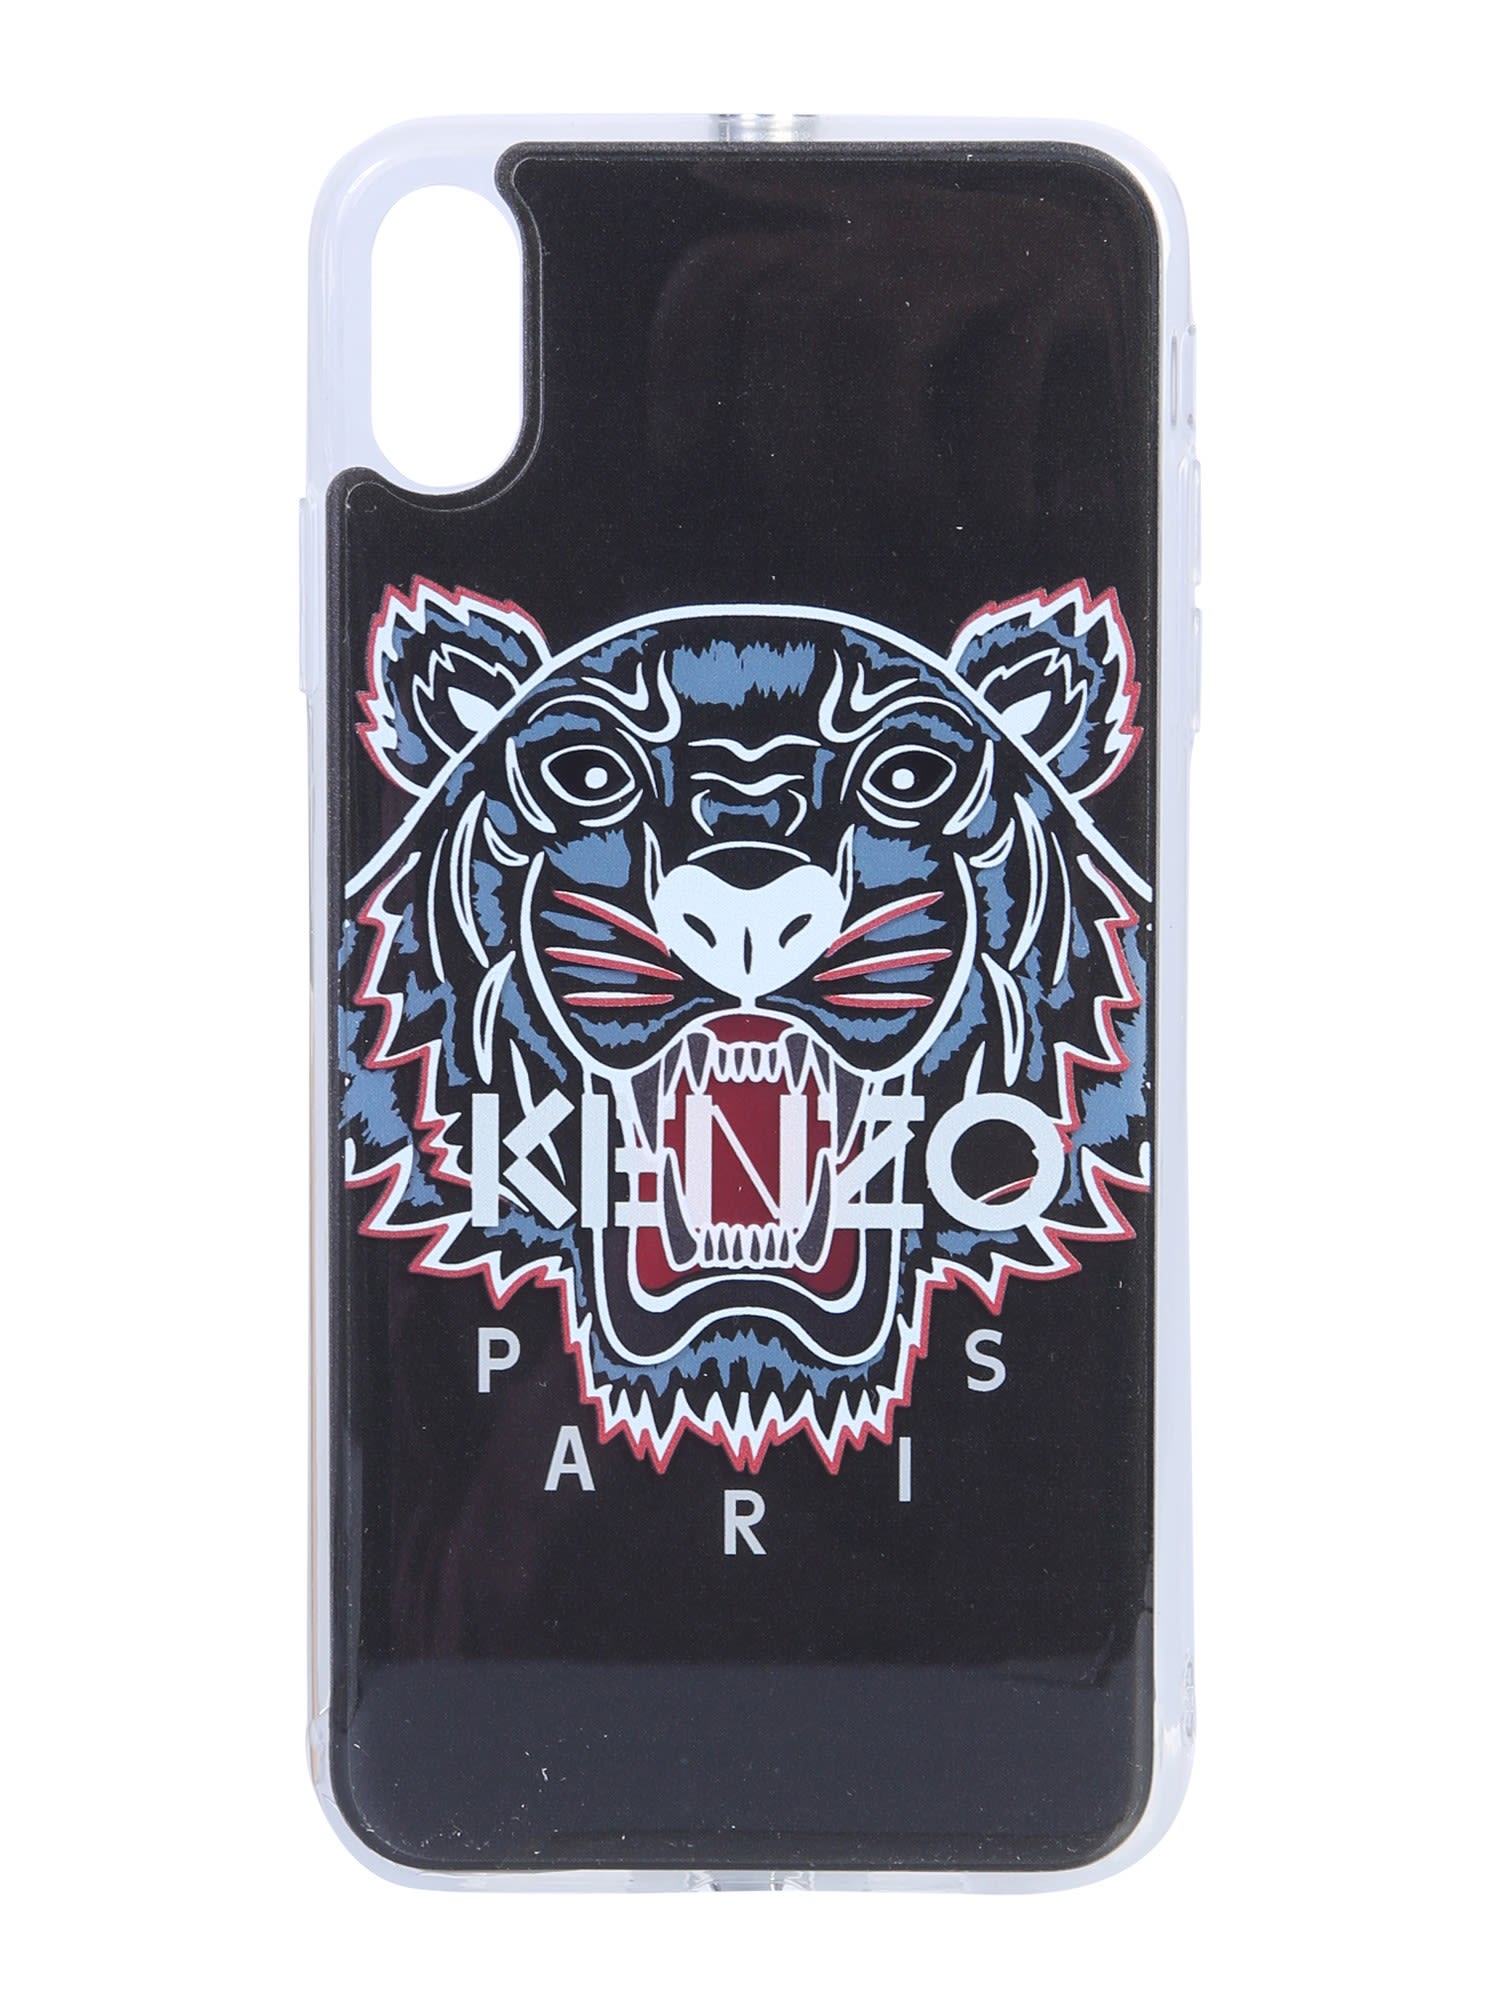 kenzo phone cover